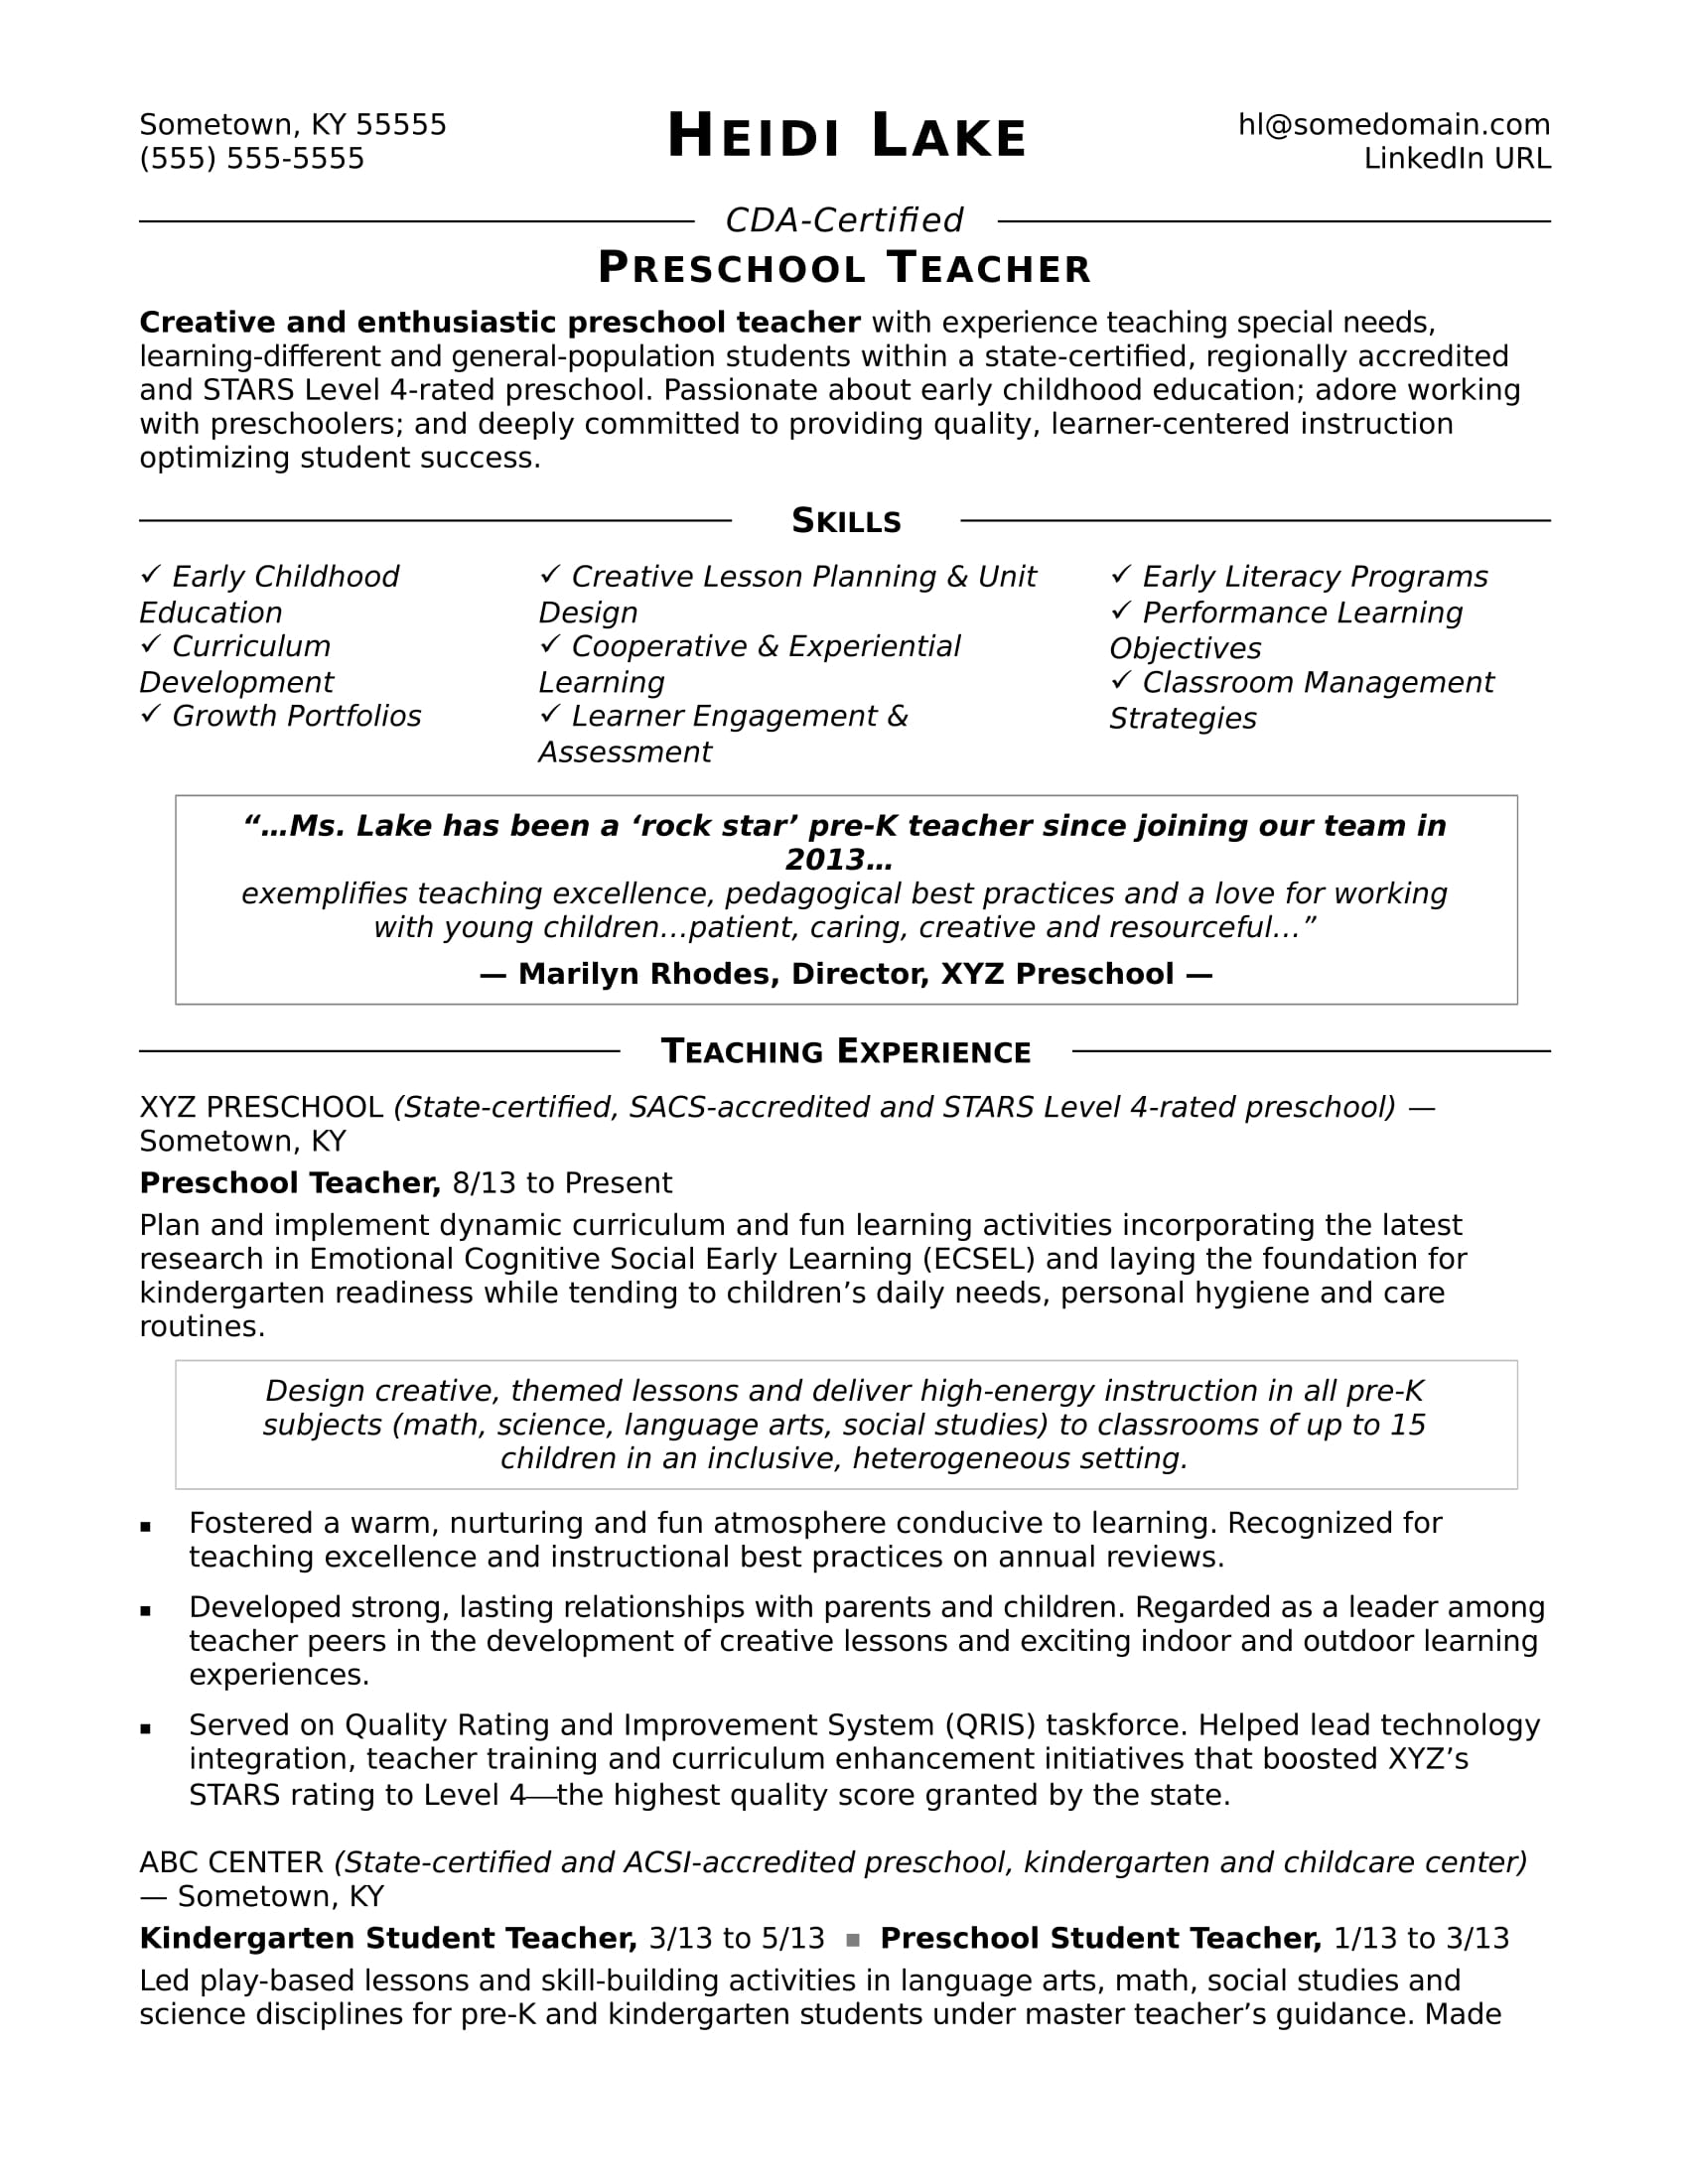 Wow Contoh Curriculum Vitae Qualities Of A Teacher 88 Untuk Desain Curriculum Vitae Unik di post Contoh Curriculum Vitae Qualities Of A Teacher